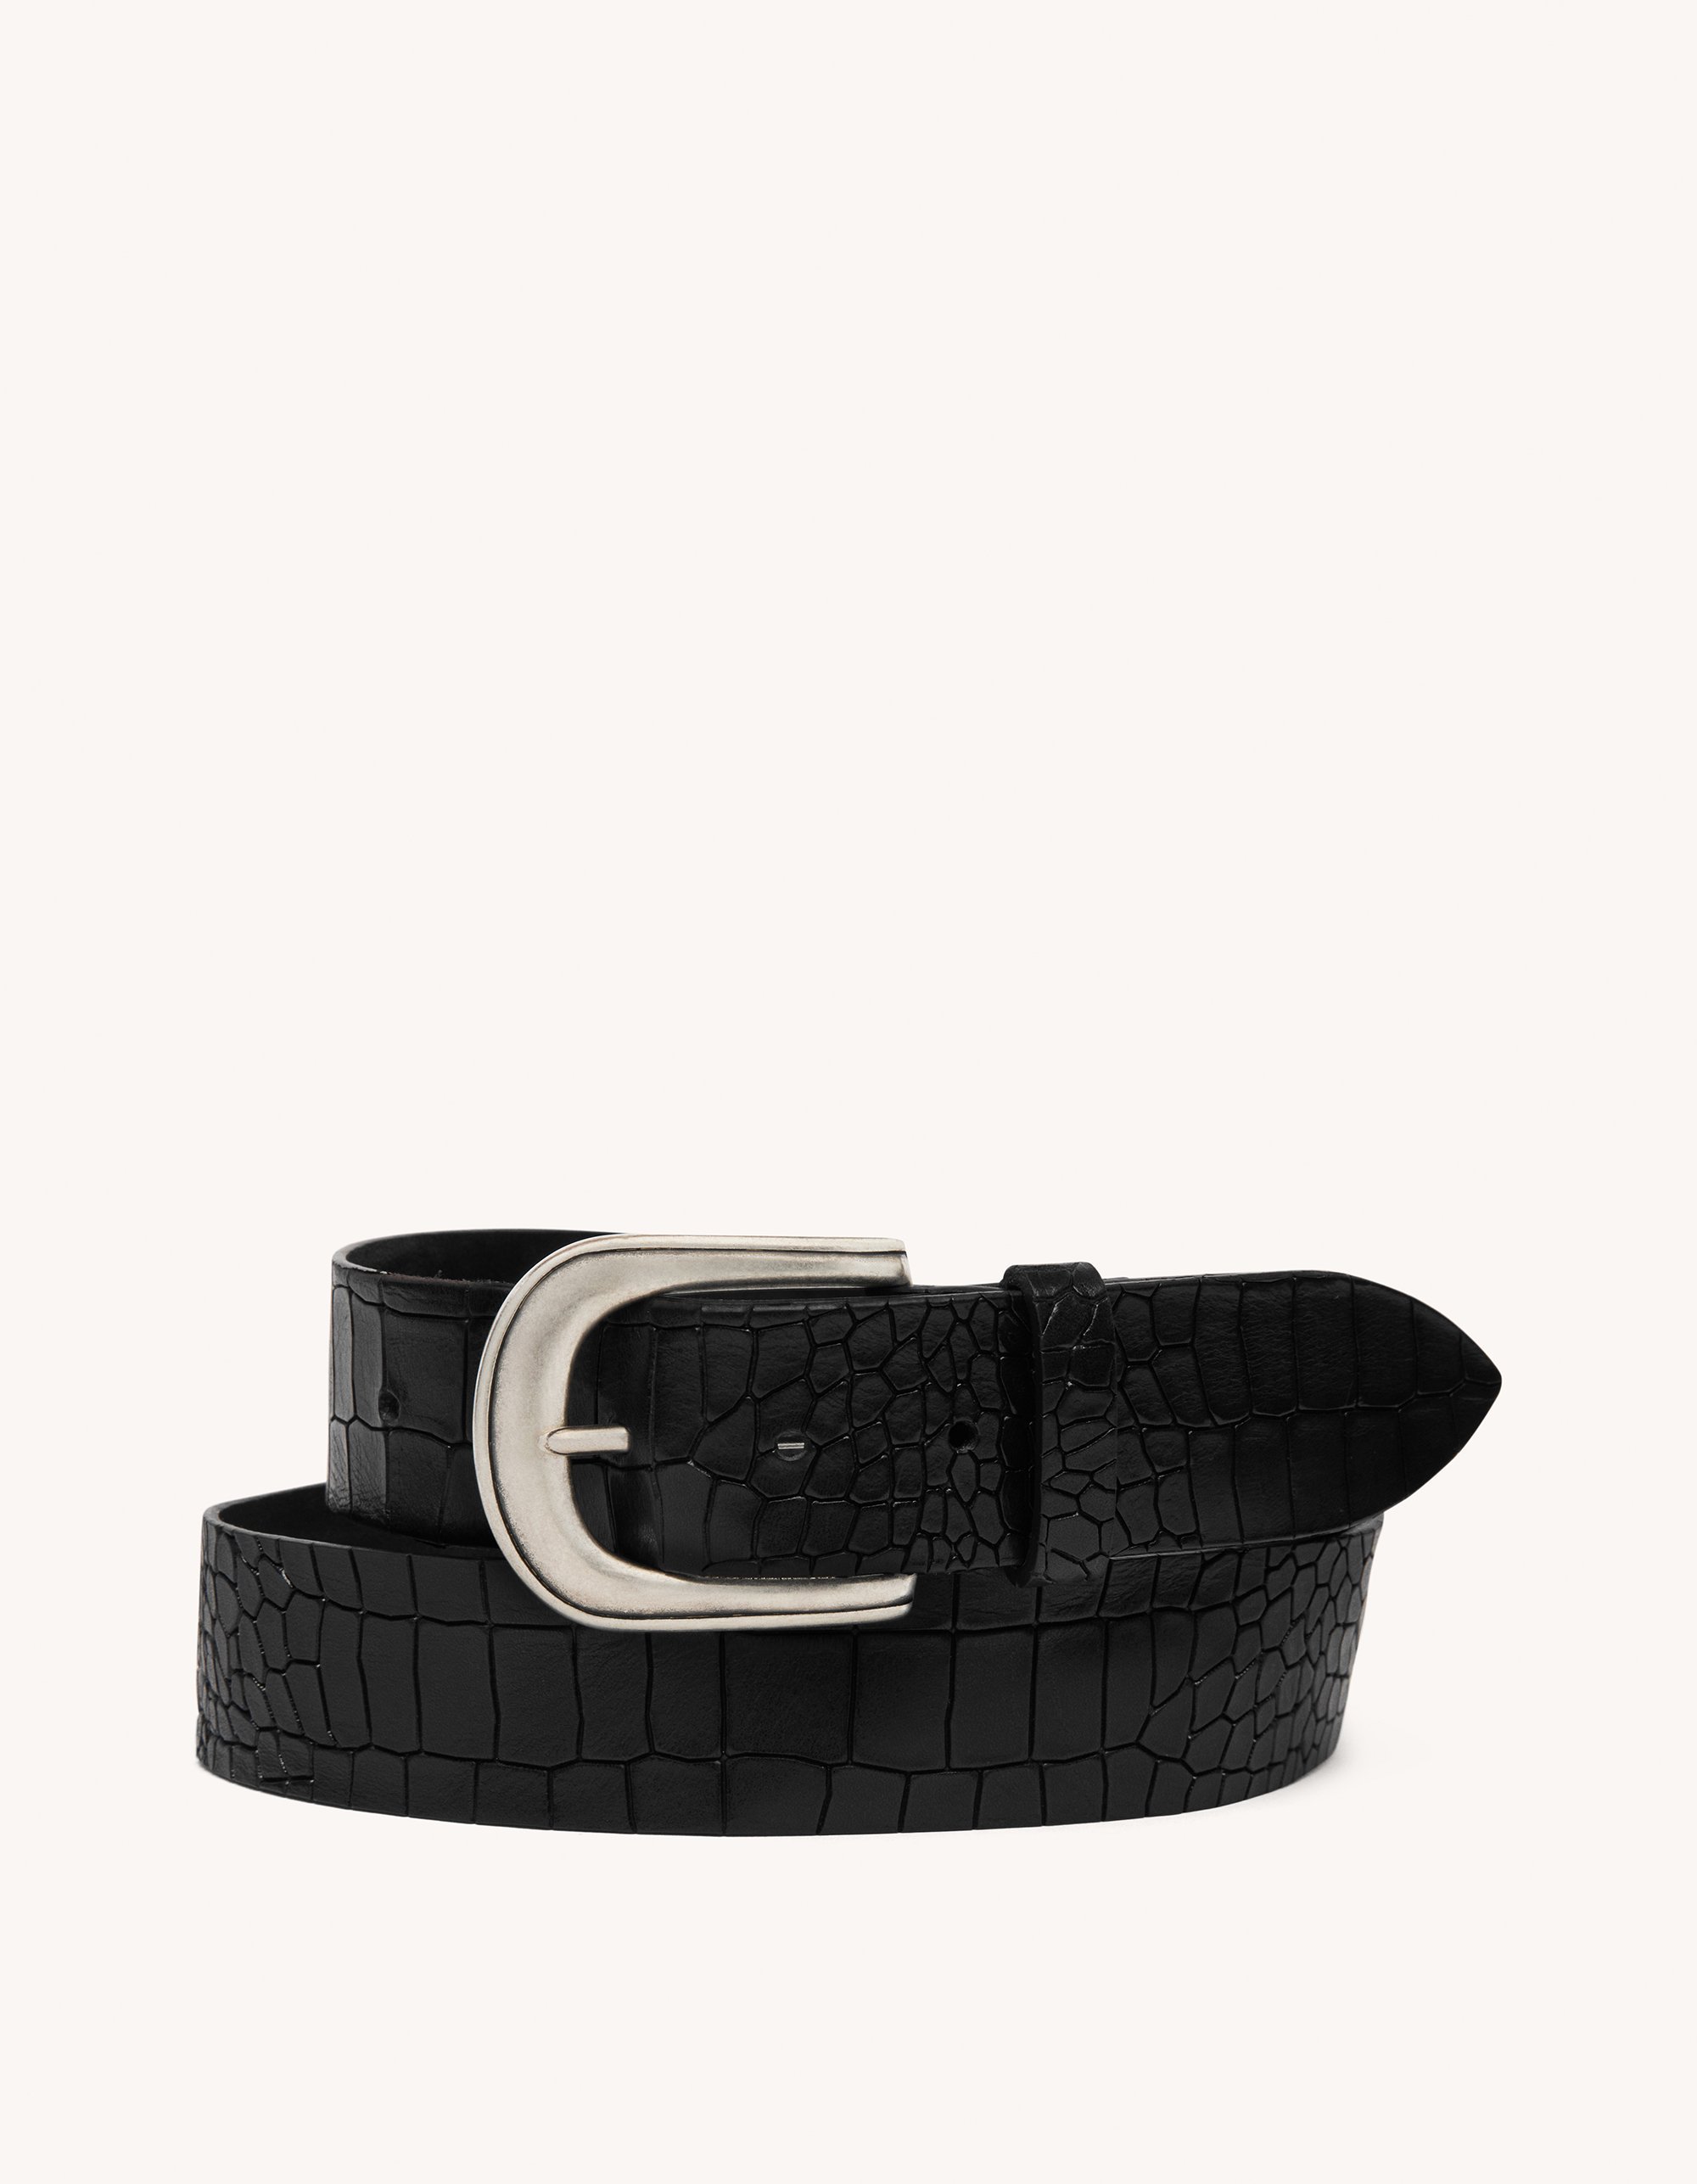 DOONDUPCrocodile-print leather belt